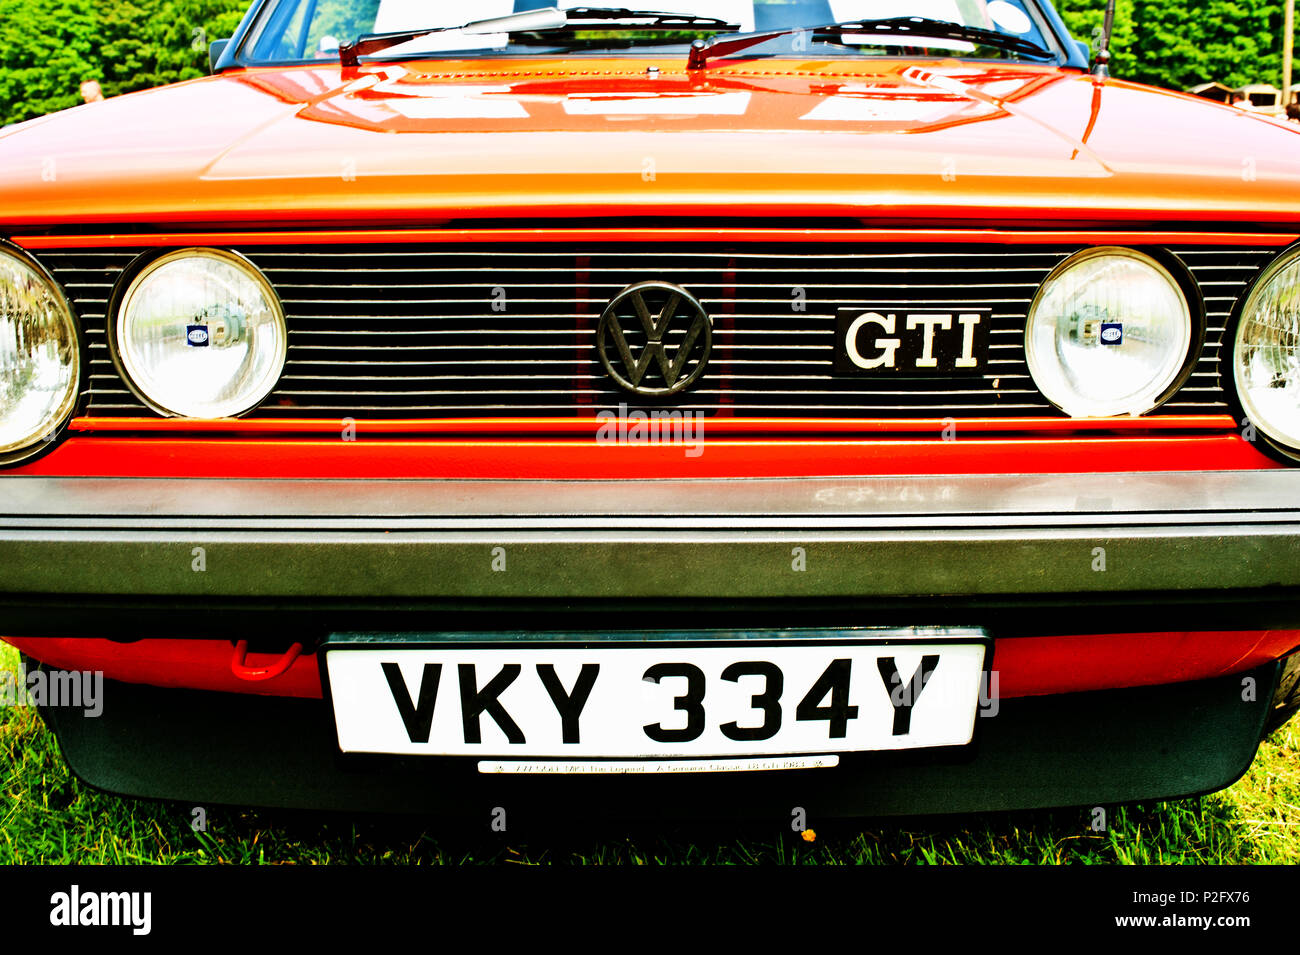 Volkswagen Golf MK 1 GTI Stock Photo - Alamy